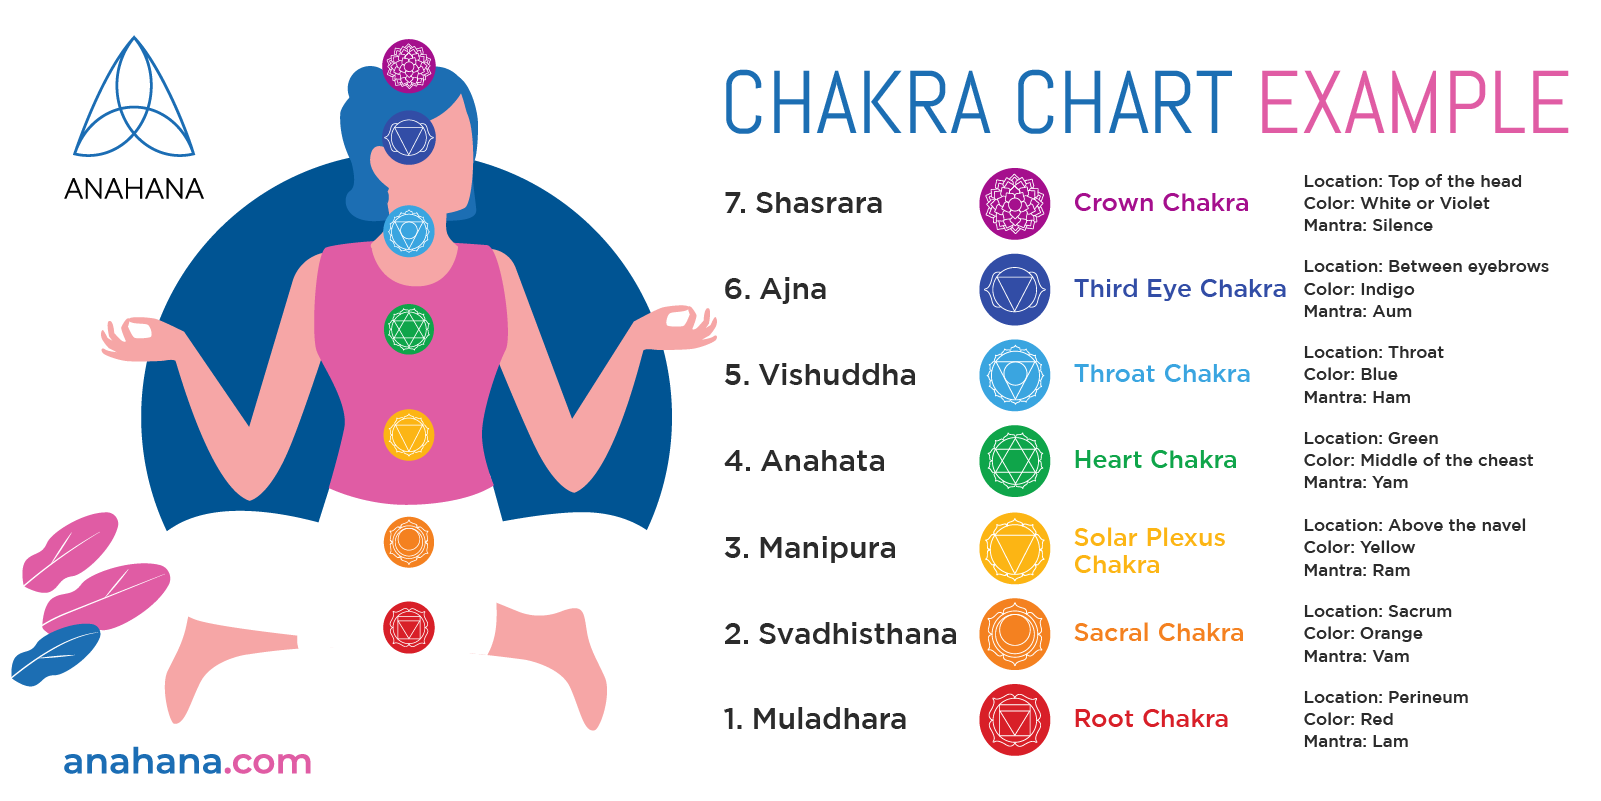 What Is Chakra Meditation? - Zenluma